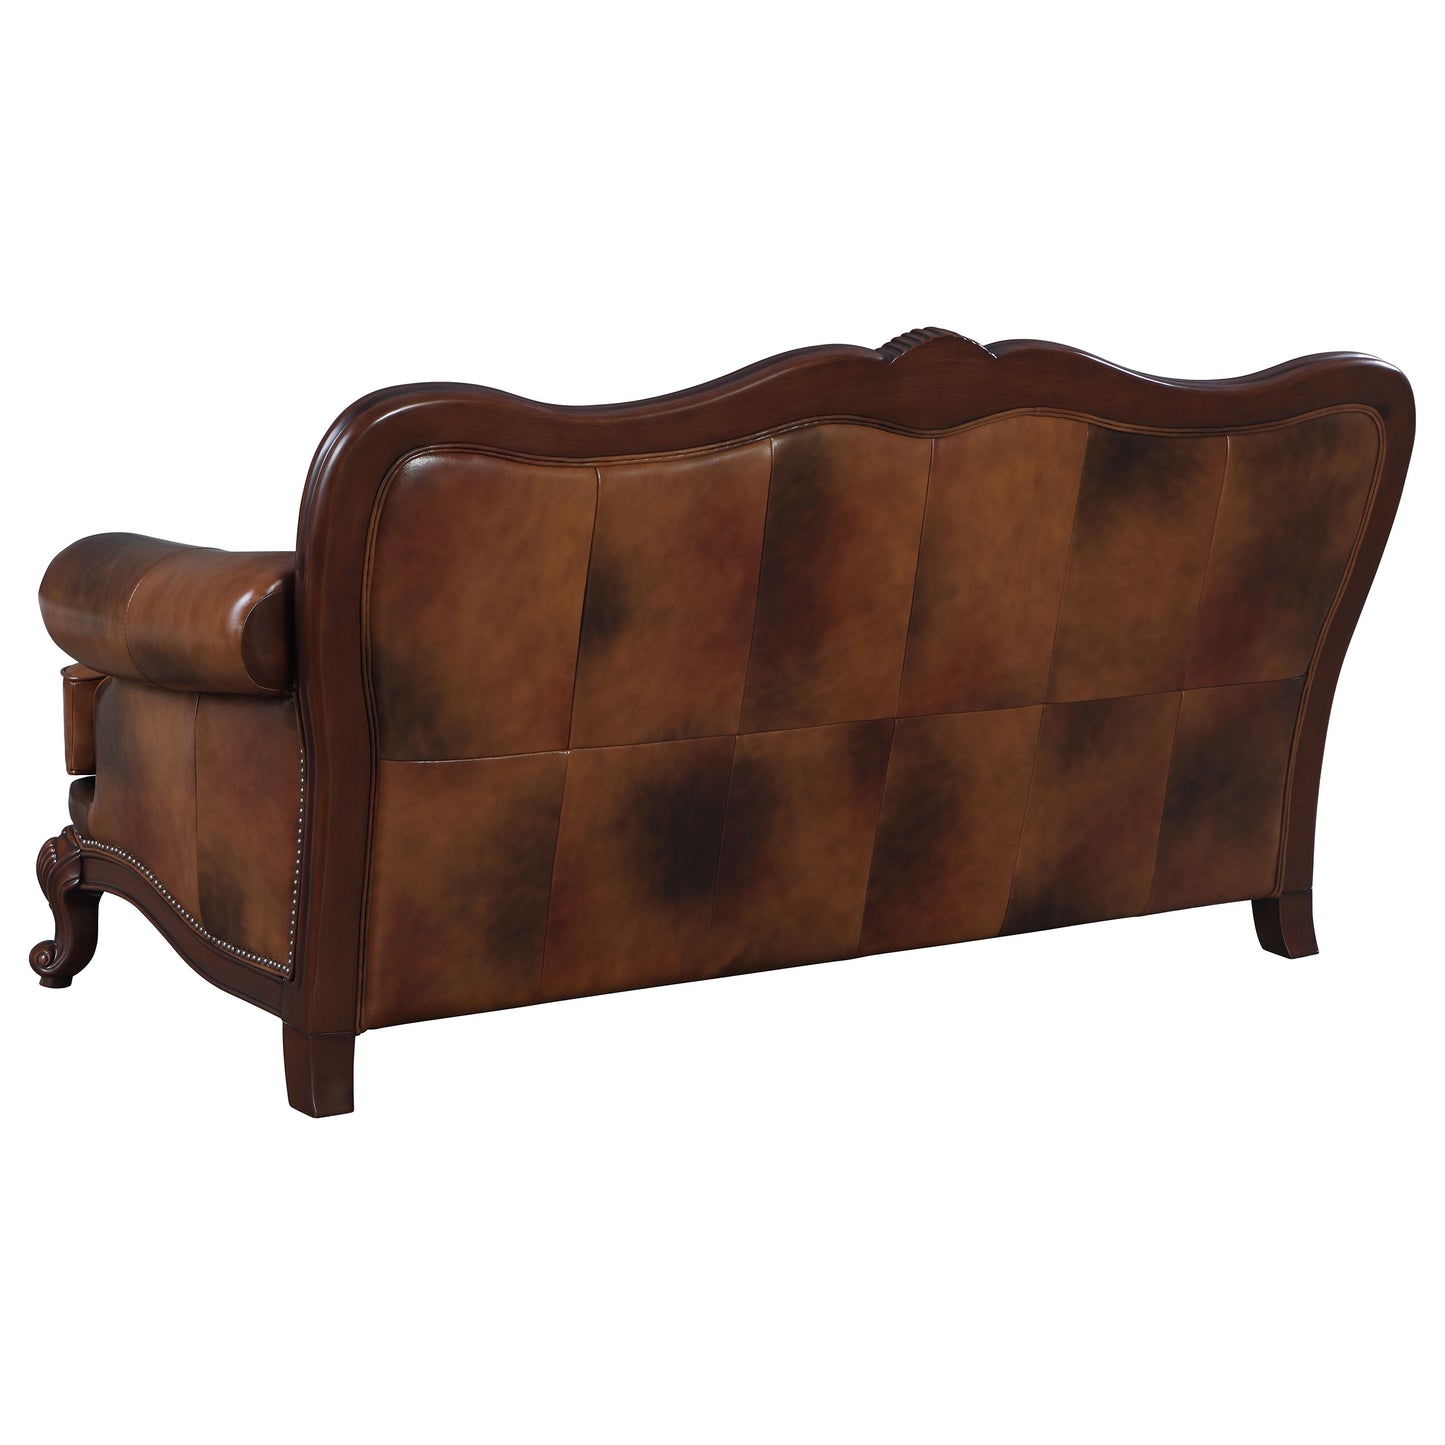 Victoria Upholstered Tufted Living Room Set Brown